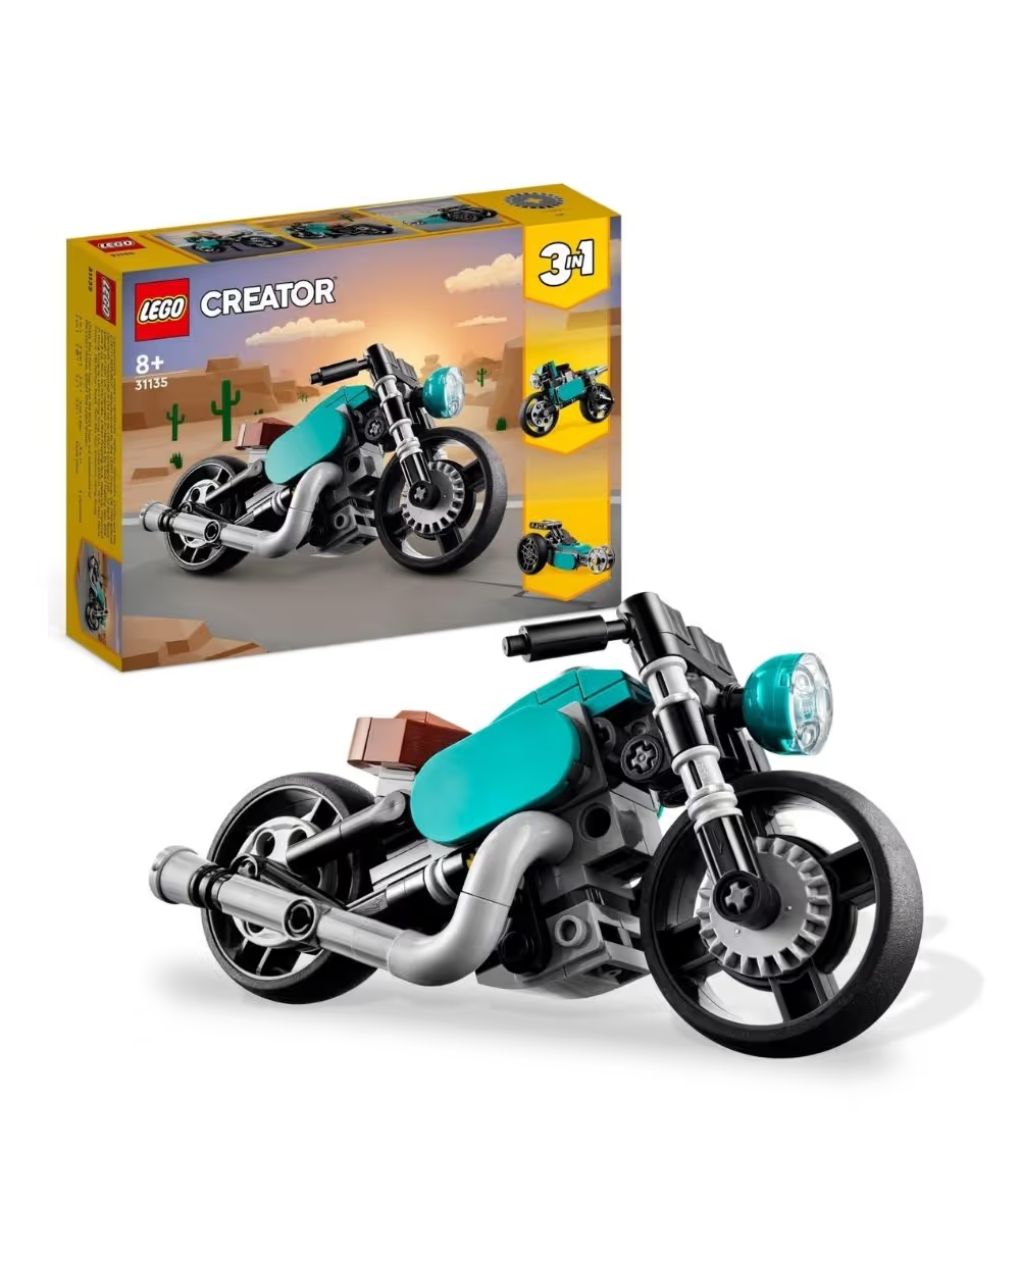 Lego creator 3in1 vintage motorcycle 31135